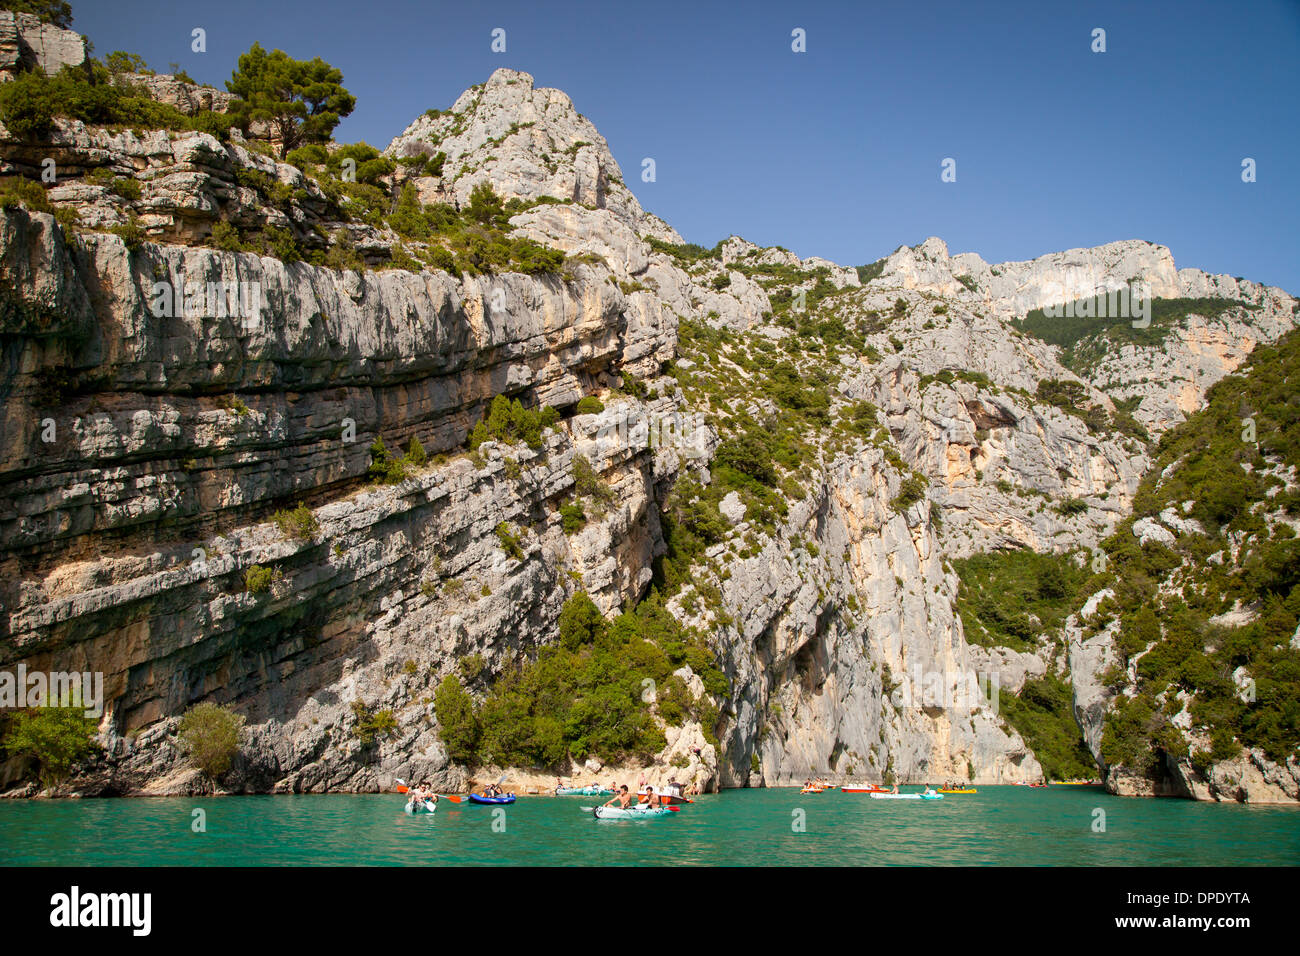 Boating in Gorges du Verdon, Alpes de Haute Provence, France Stock Photo